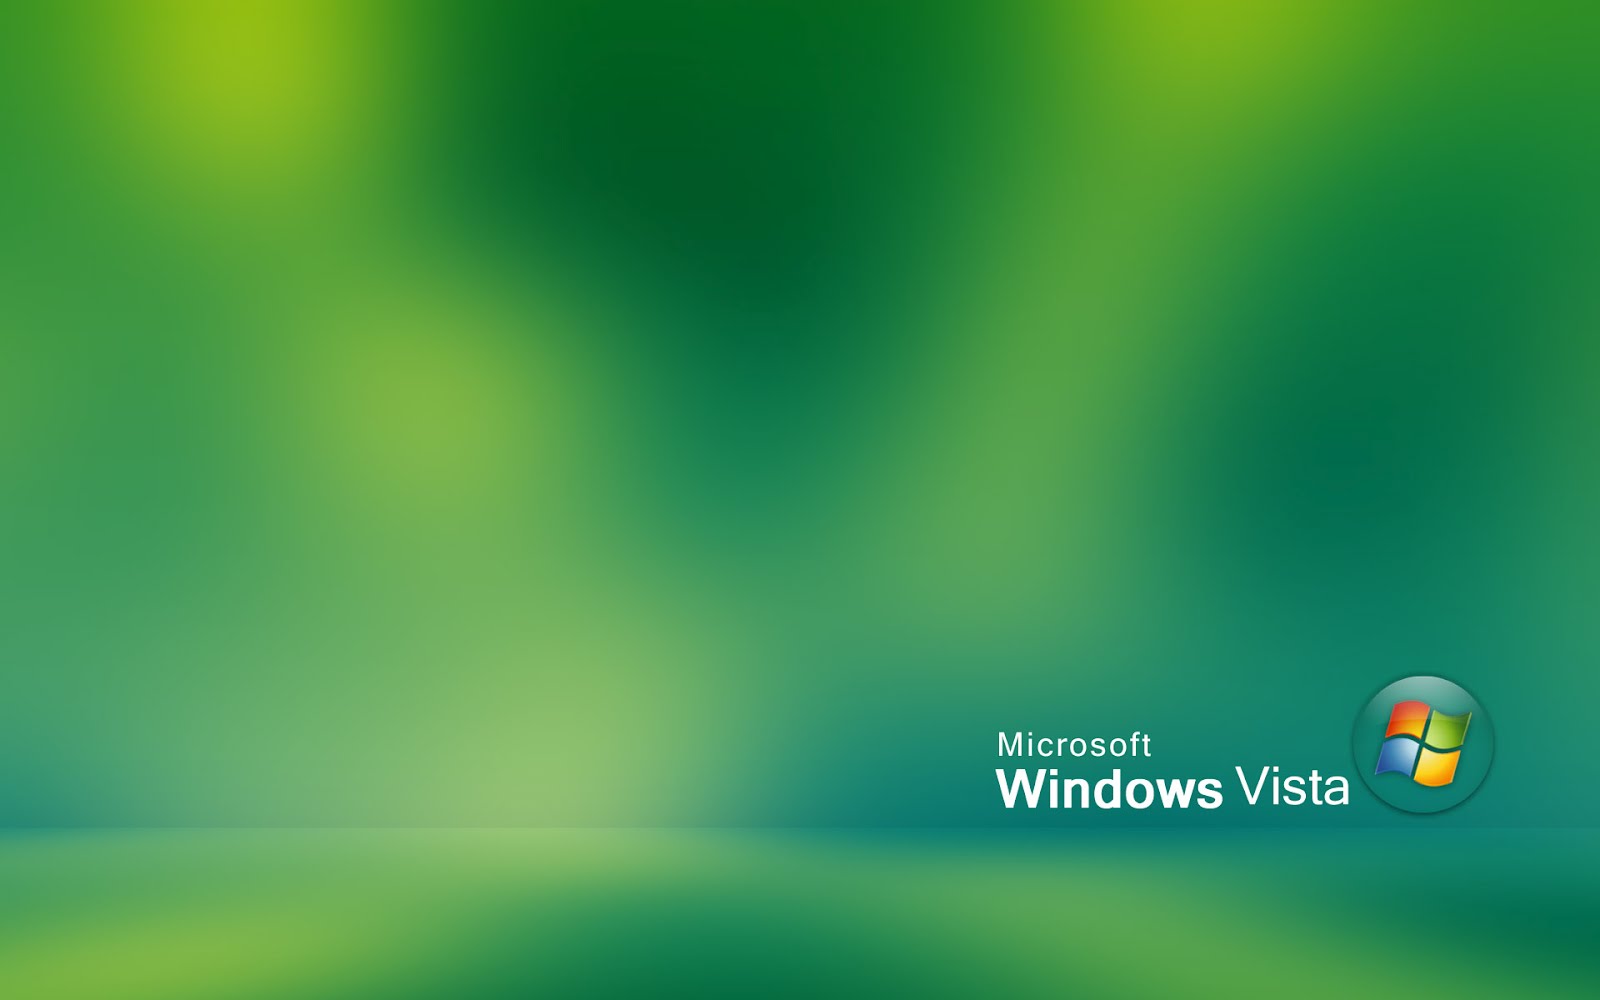 Microsoft Windows Vista Wallpaper I HD Puter